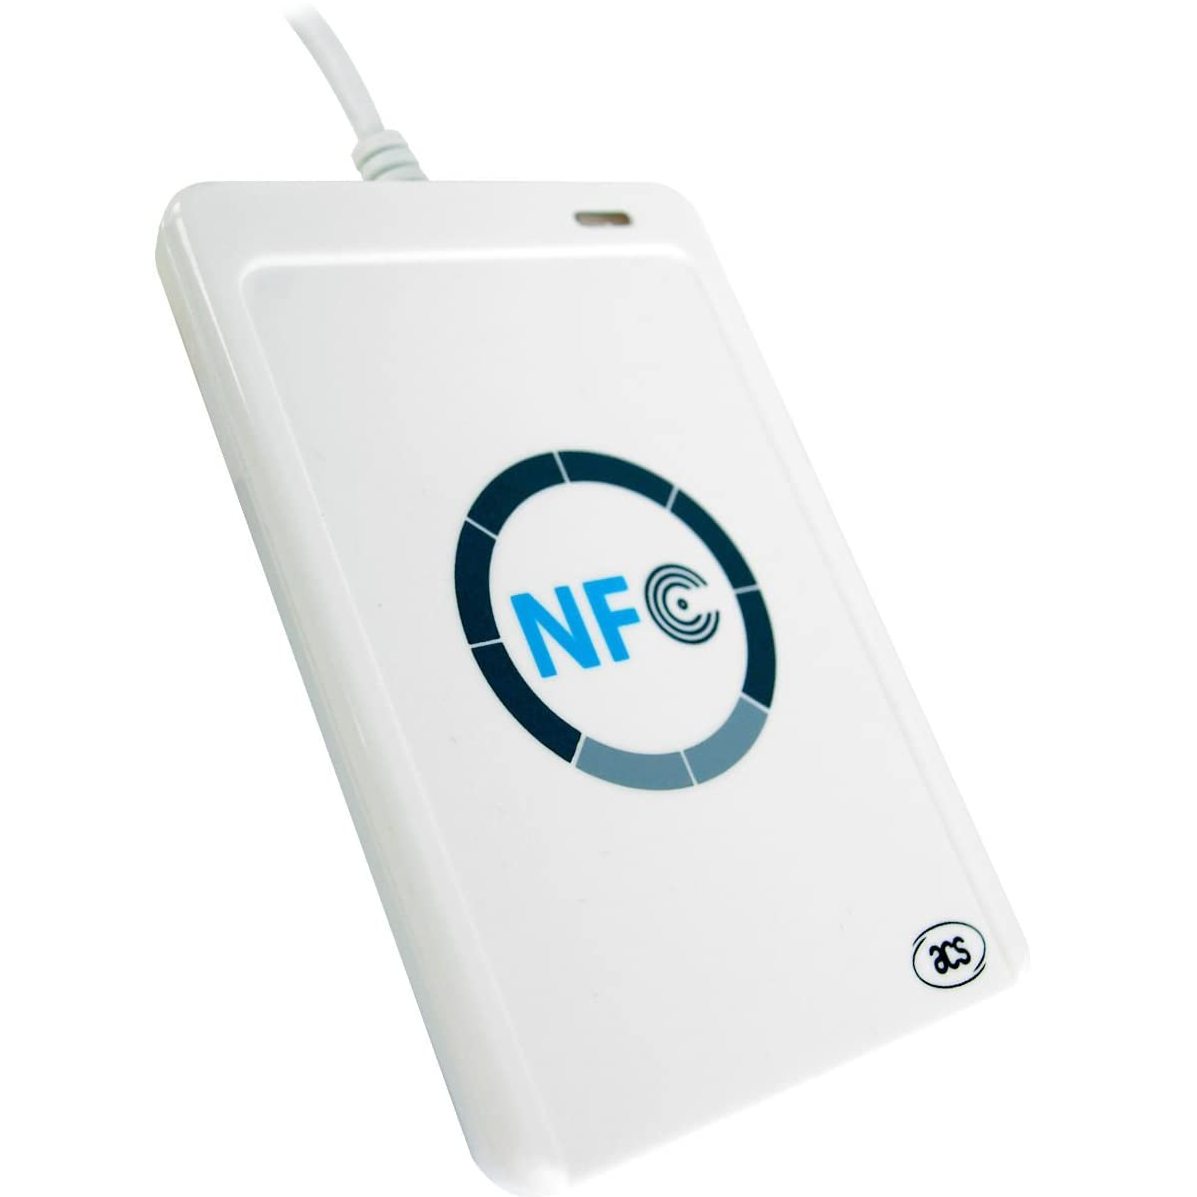 ACS NFC ACR122U RFID Contactless Smart IC Card Reader